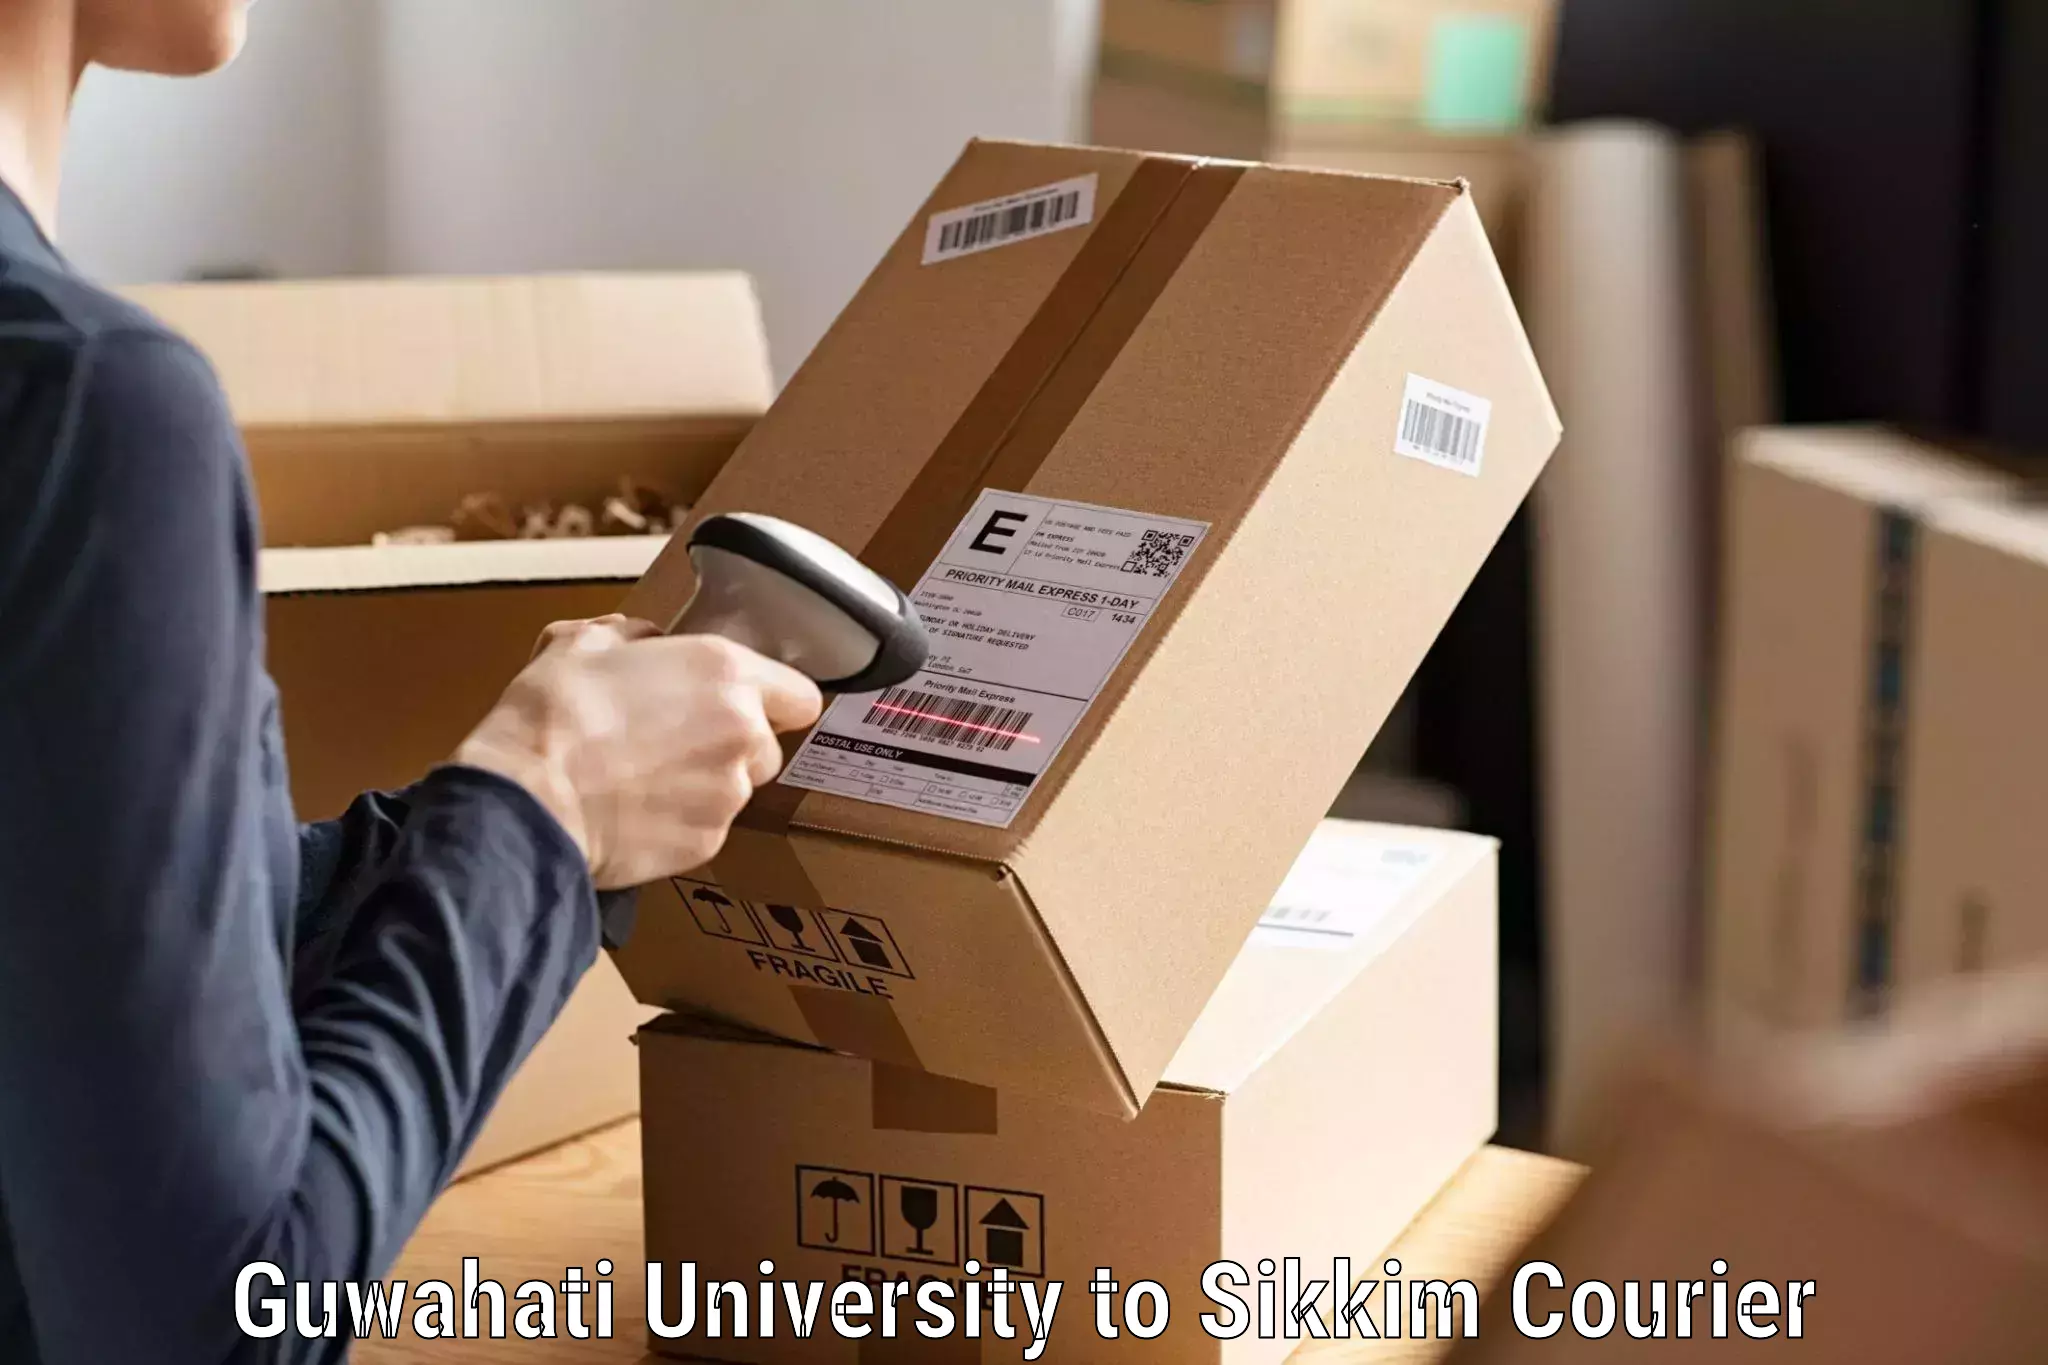 Courier service partnerships Guwahati University to Rangpo